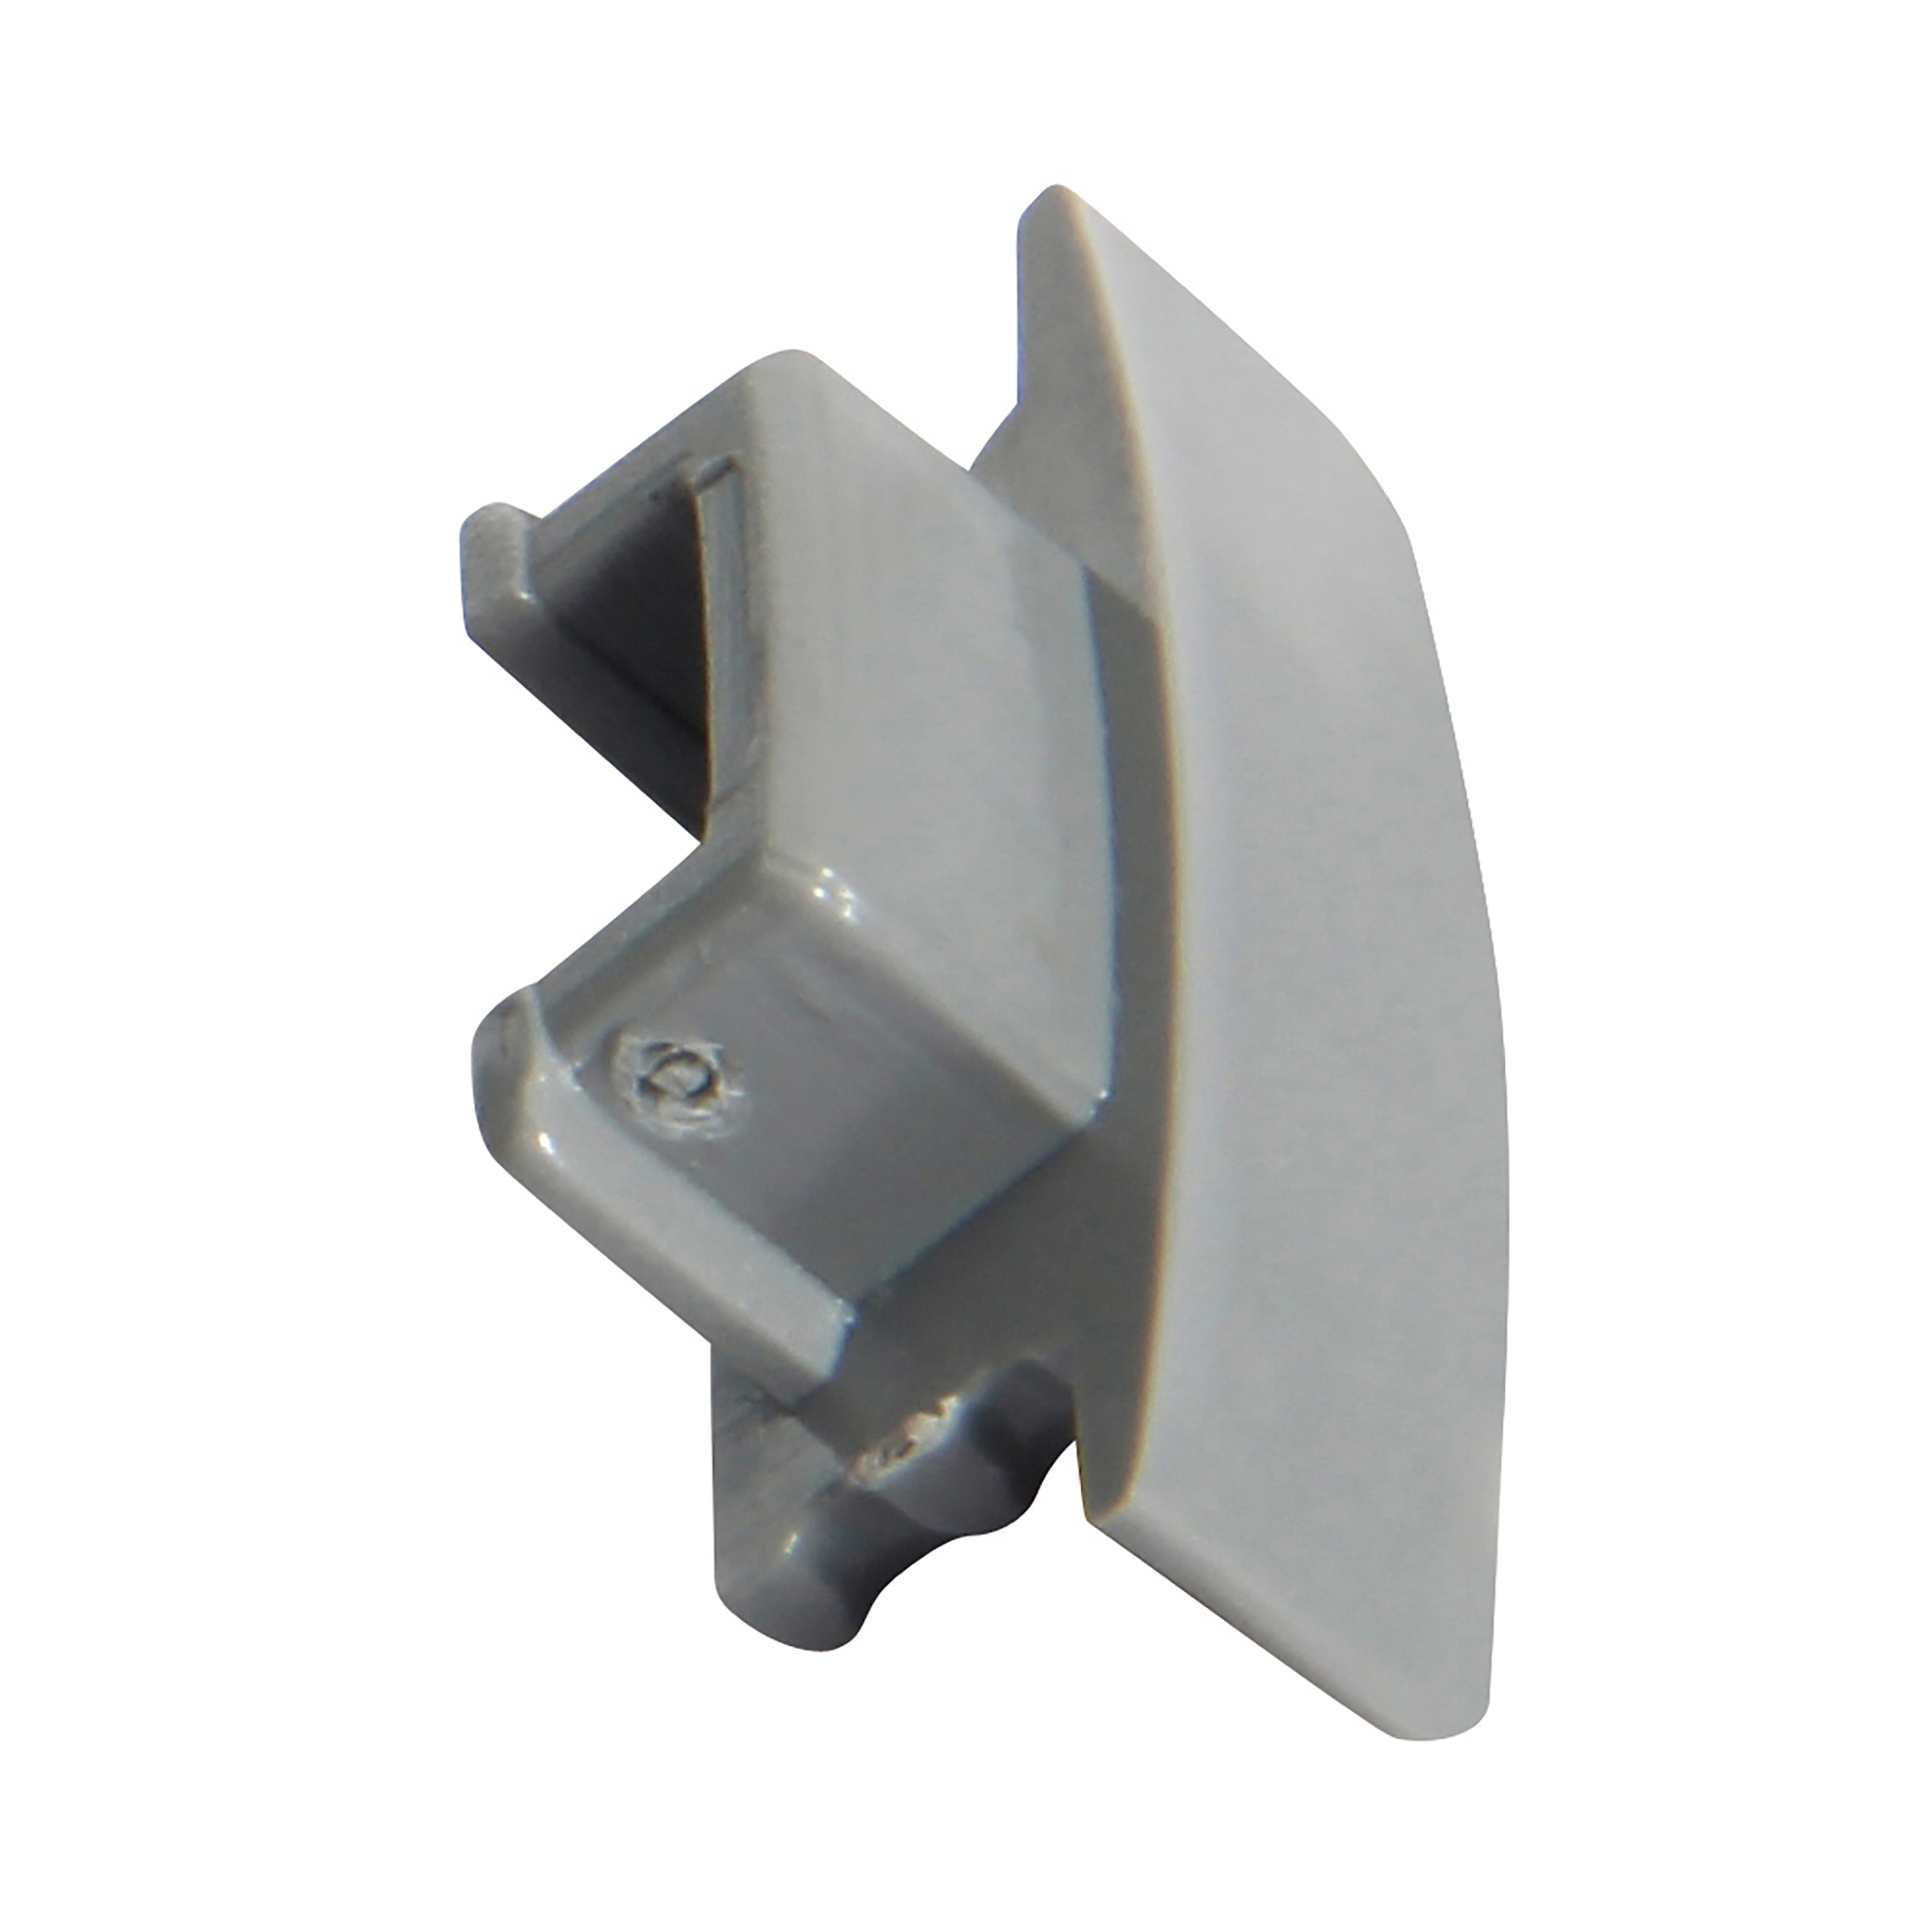 DA930022  Lin 1707R; (4 pcs) Grey Endcap Without Hole For DA900007; Polycarbonate Fireproof Material; 25x7mm